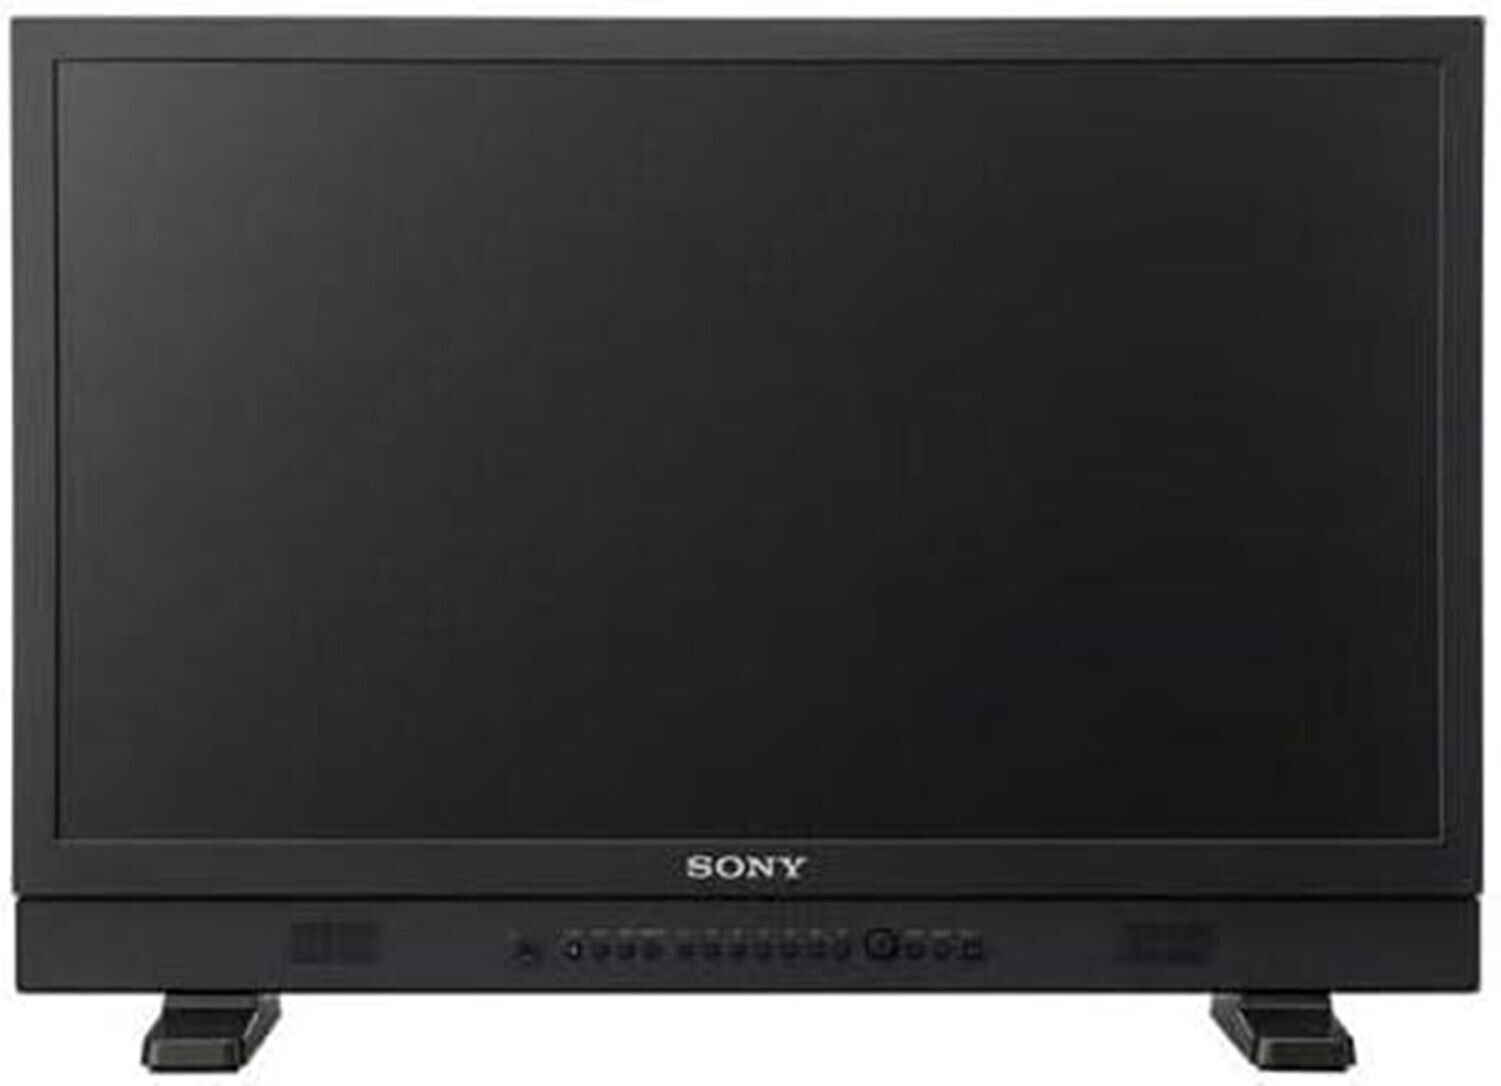 Sony LMD-B240 24" Basic Grade Full HD LCD Monitor, 1920x1080 Resolution - $2,100.00